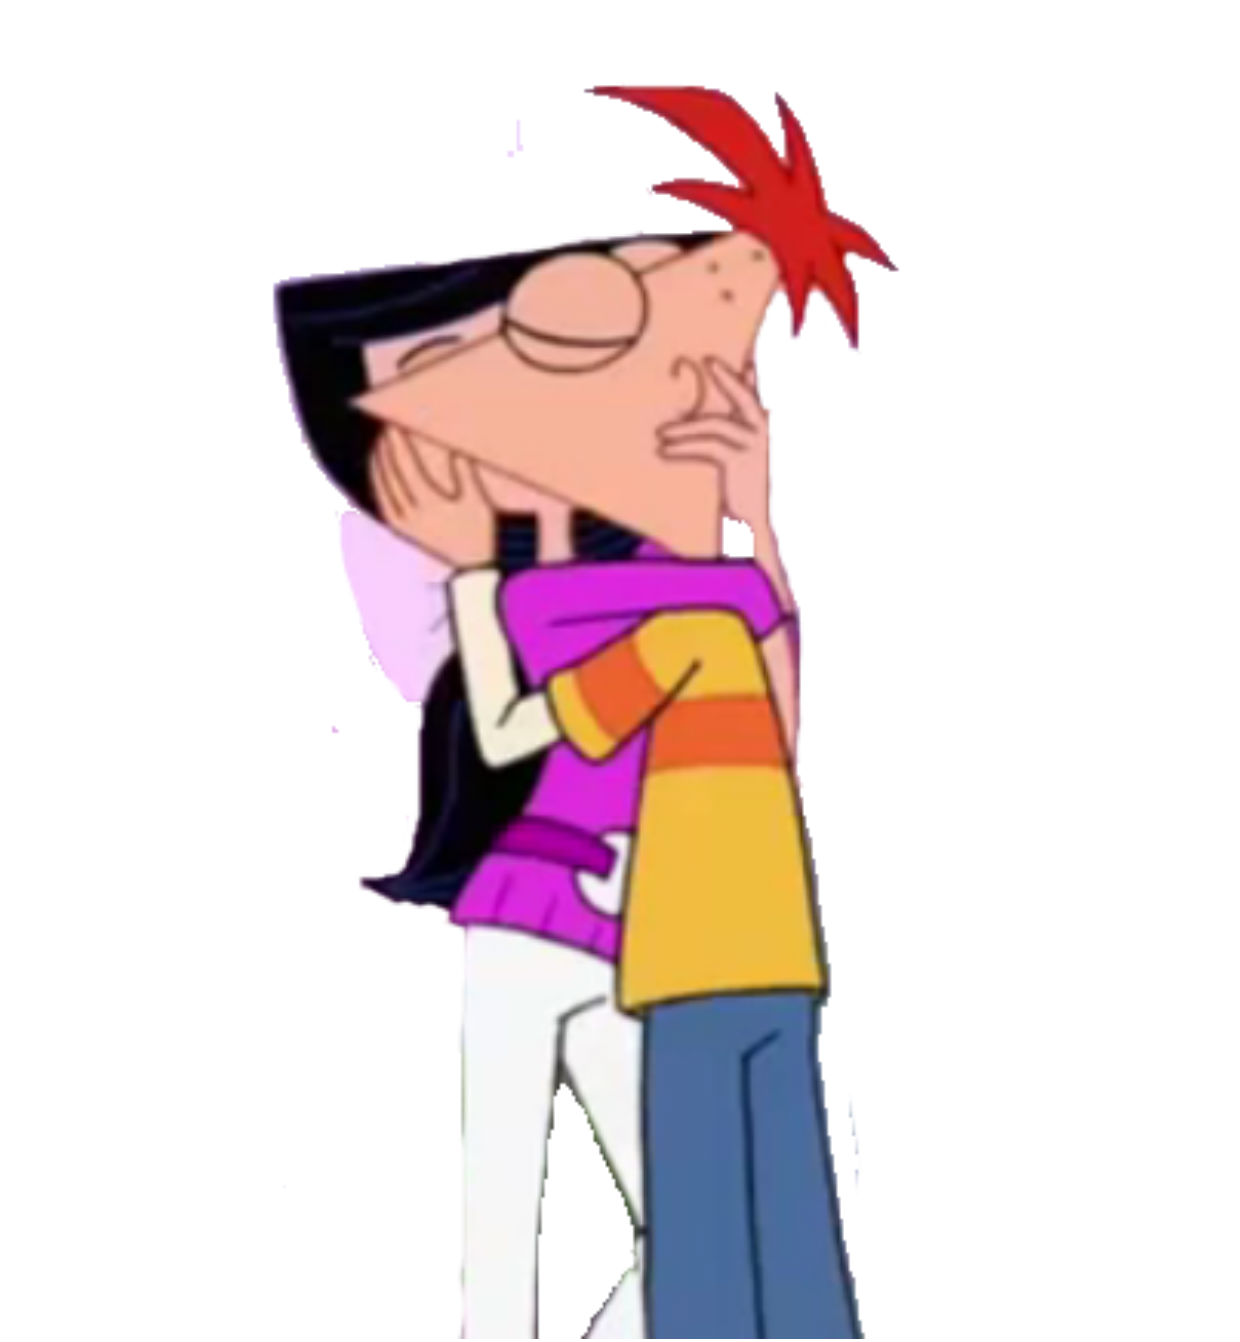 Phineas beija Isabella?